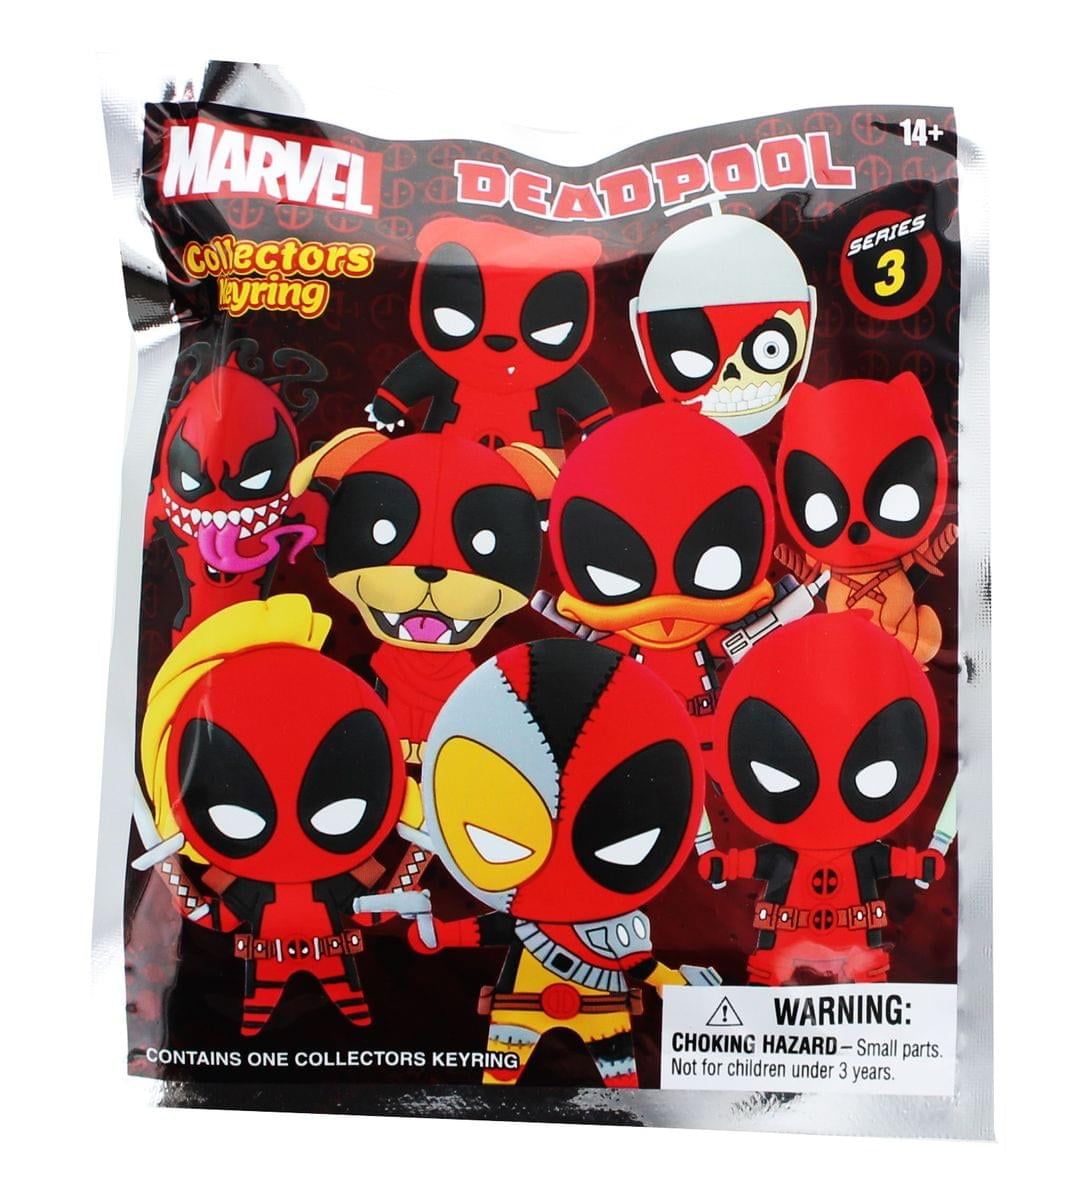 Marvel Collectors Figural Keyring Series 3 Deadpool 3 Inch Exclusive B Discopool 